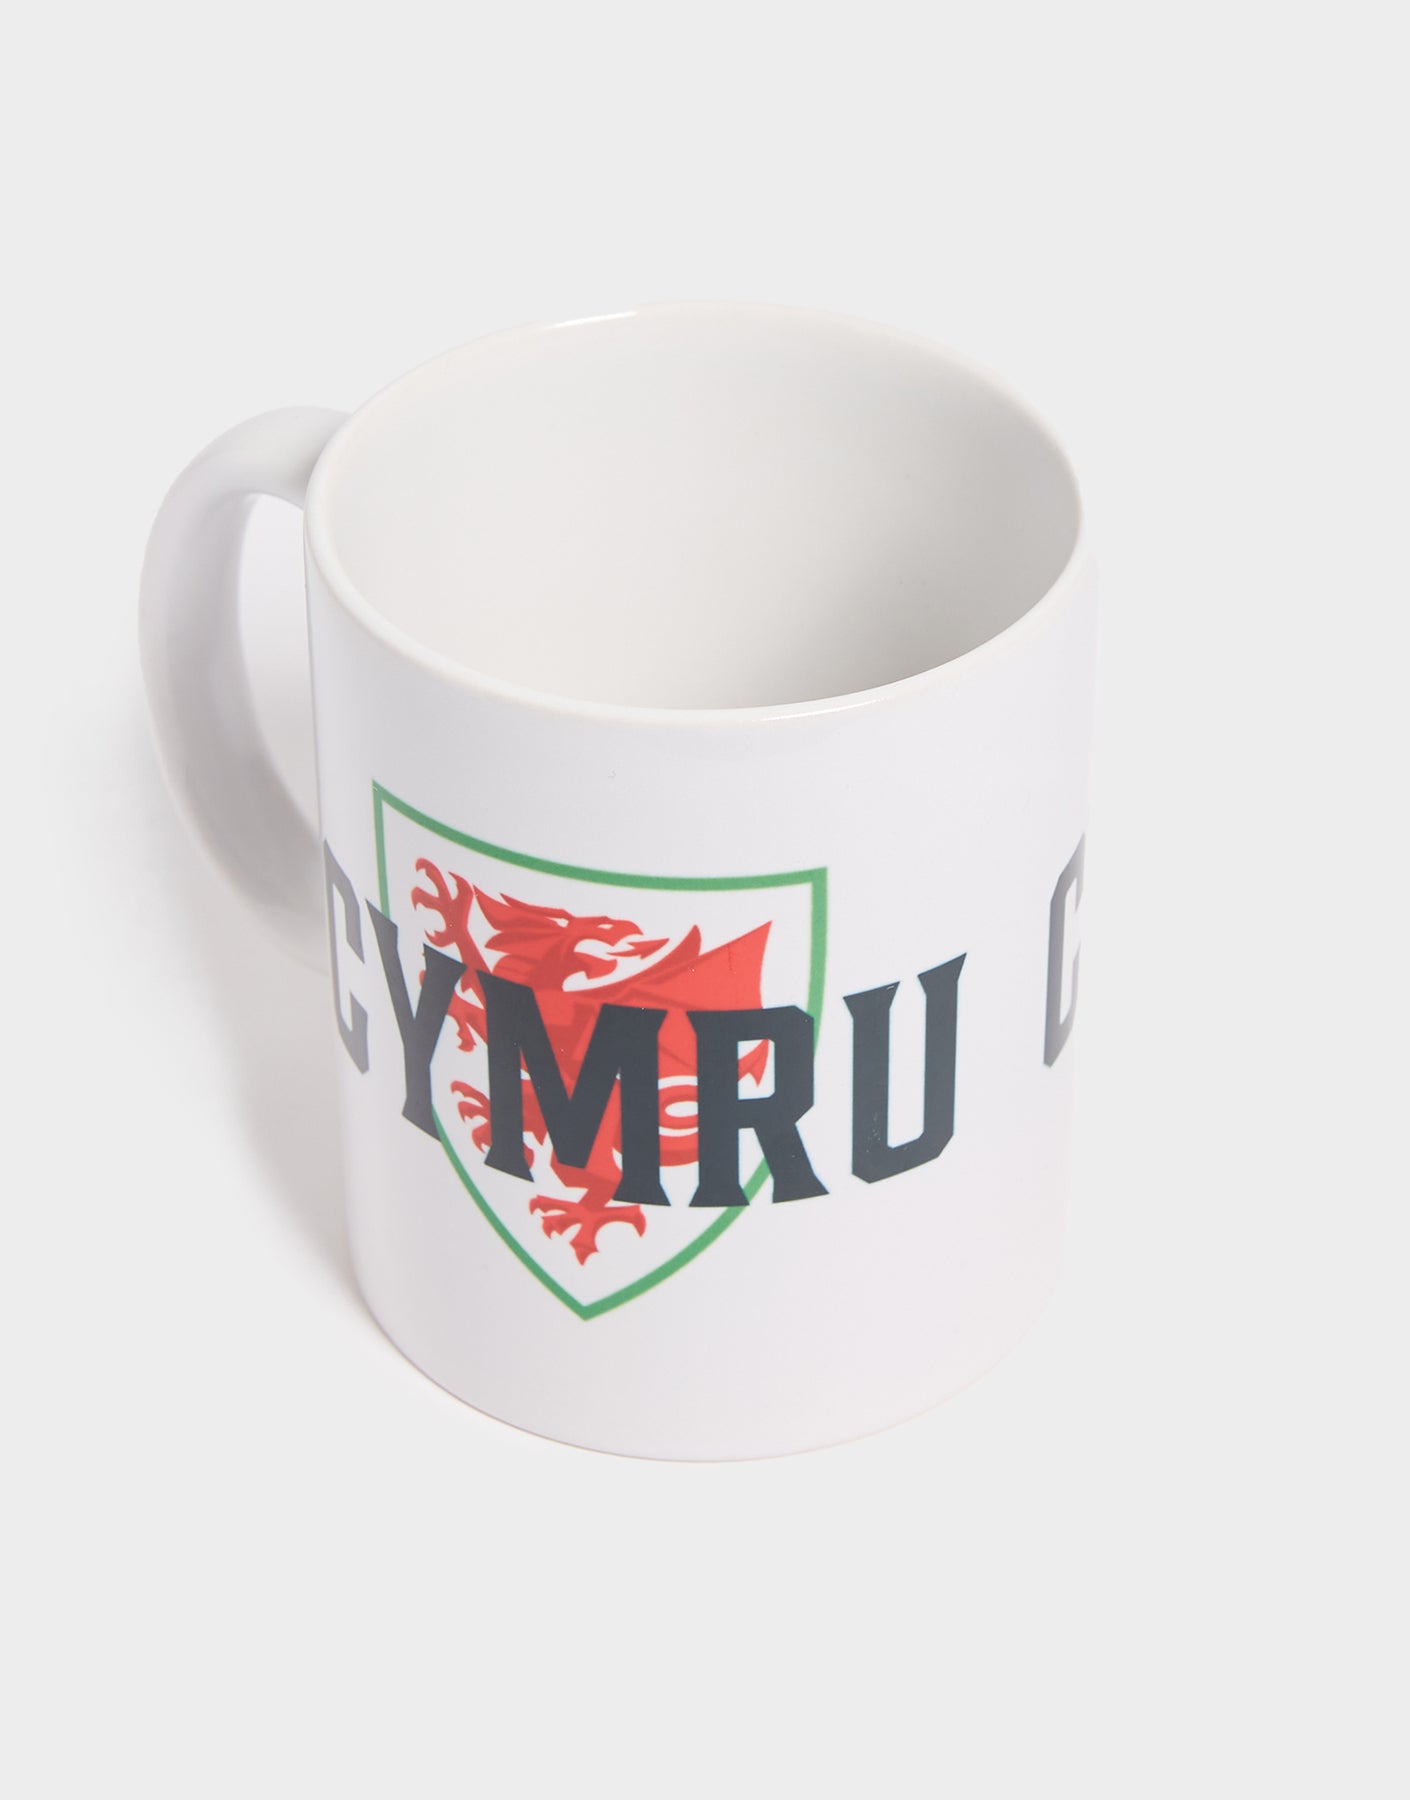 Official Team Wales CYMRU Mug - The World Football Store